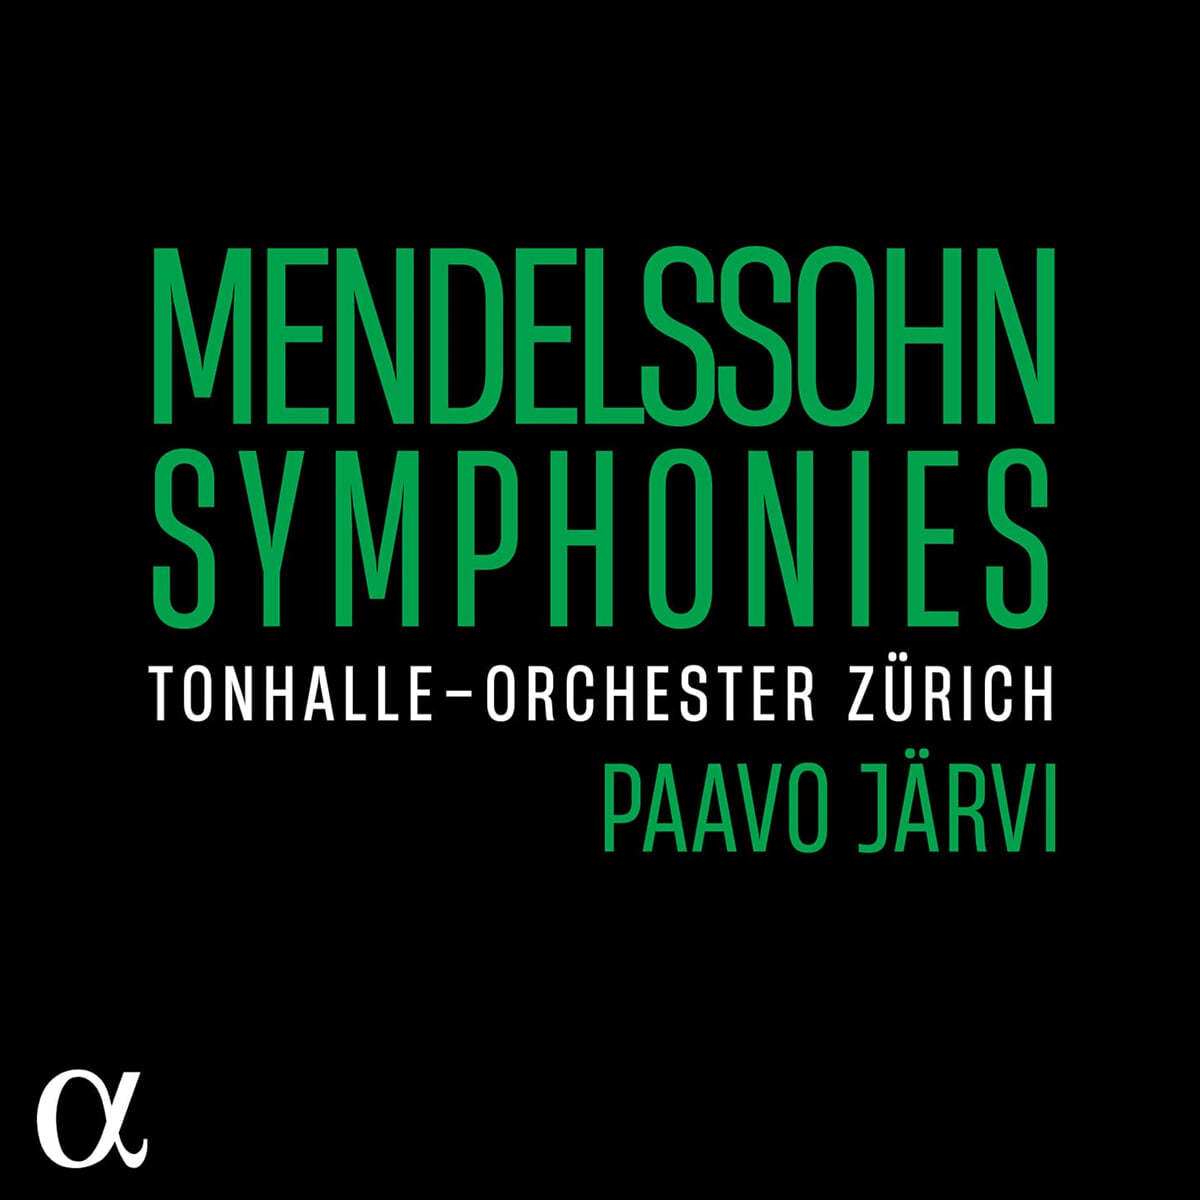 Paavo Jarvi 멘델스존: 교향곡 전곡, 한여름 밤의 꿈 (Mendelssohn: Symphonies)